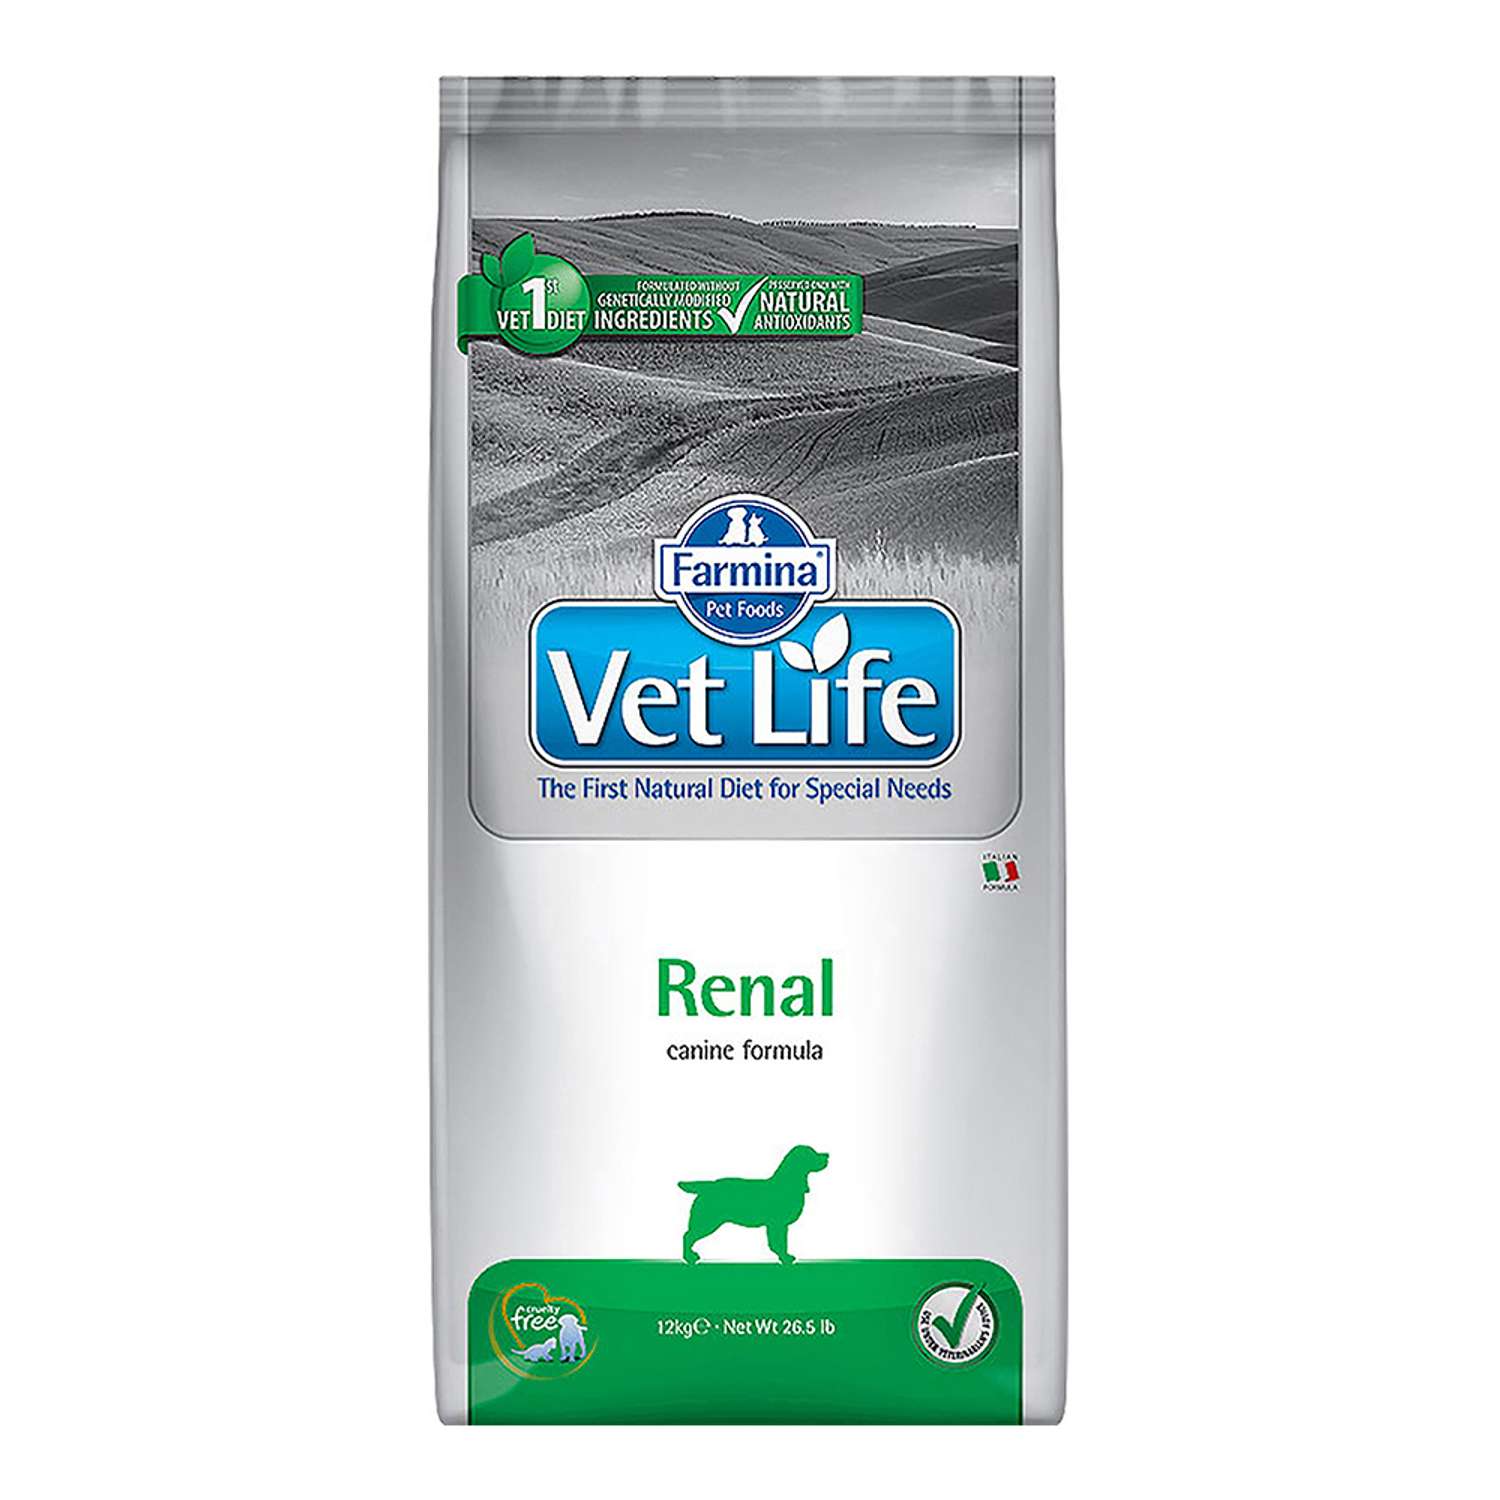 Vet life 10. Фармина корм для кошек vet Life. Vet Life корм renal для собак. Farmina vet Life hepatic для собак. Farmina vet Life Struvite для кошек 2.